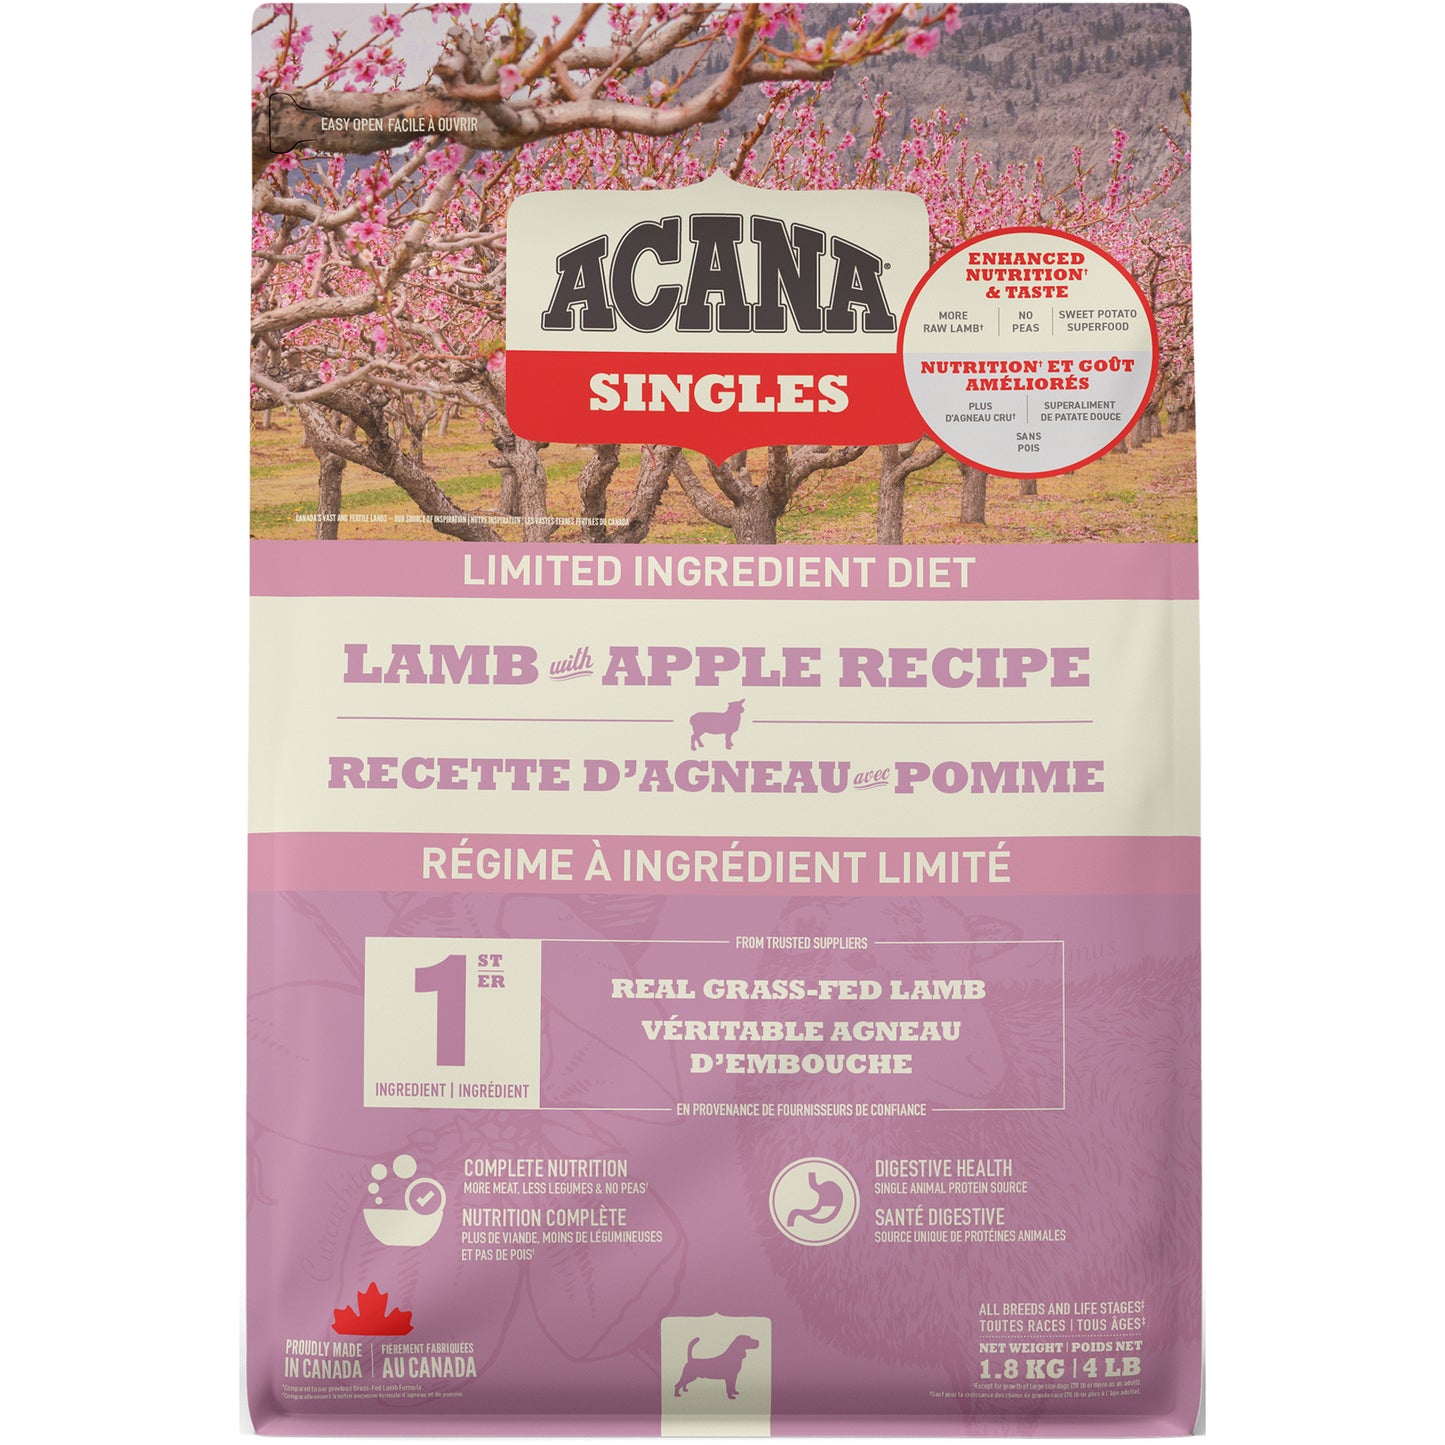 ACANA® SINGLES Lamb with Apple Recipe